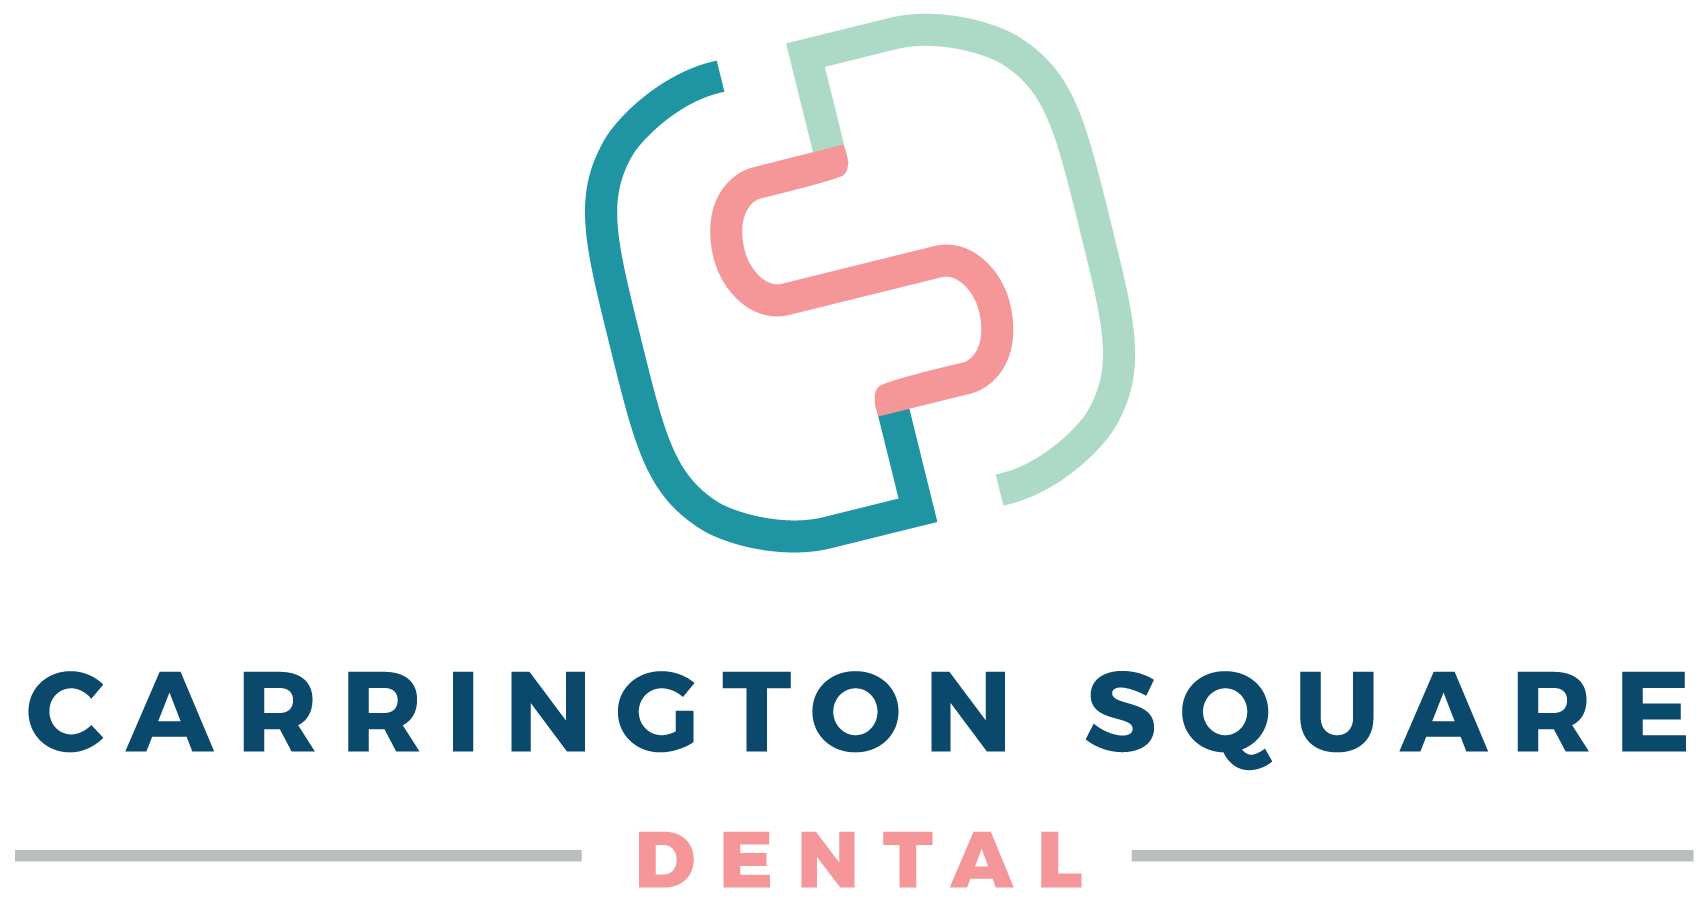 carrington square dental logo